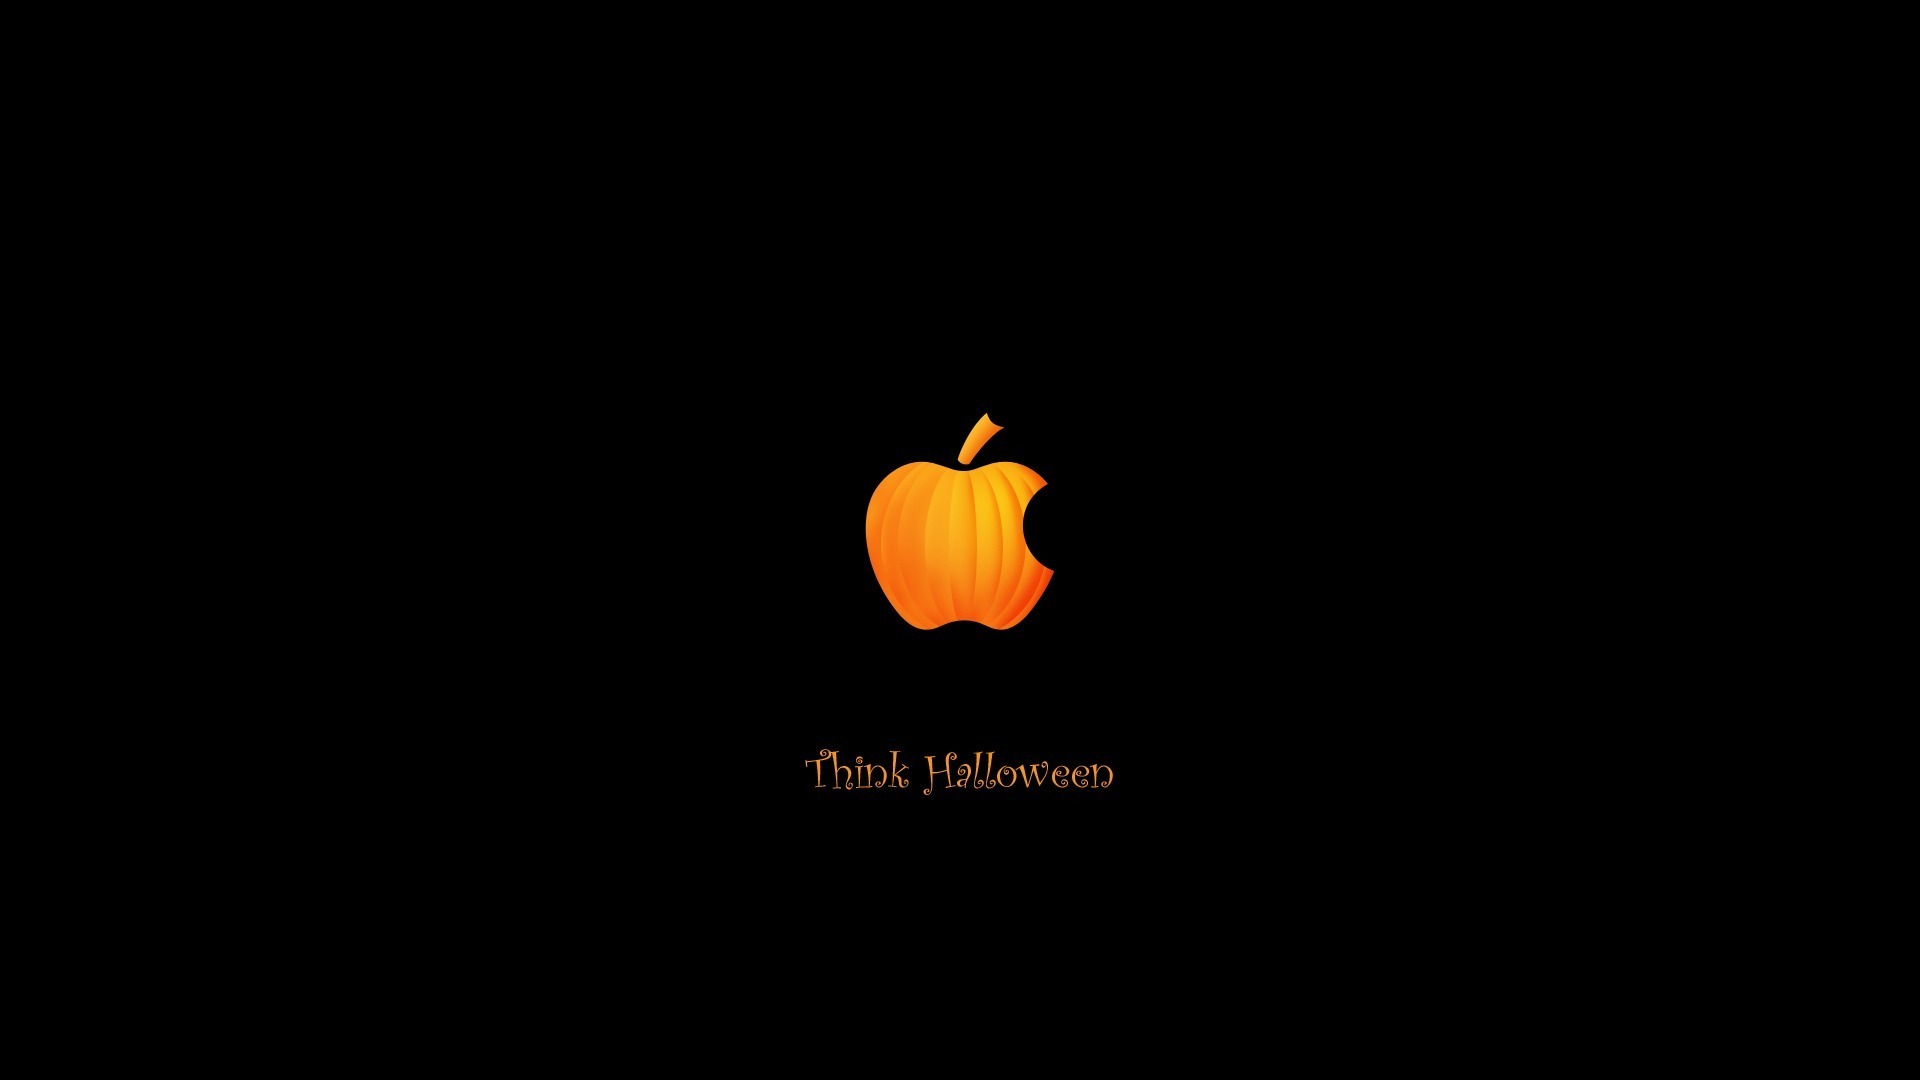 Halloween, Apple Inc., Pumpkin, Black background Wallpaper